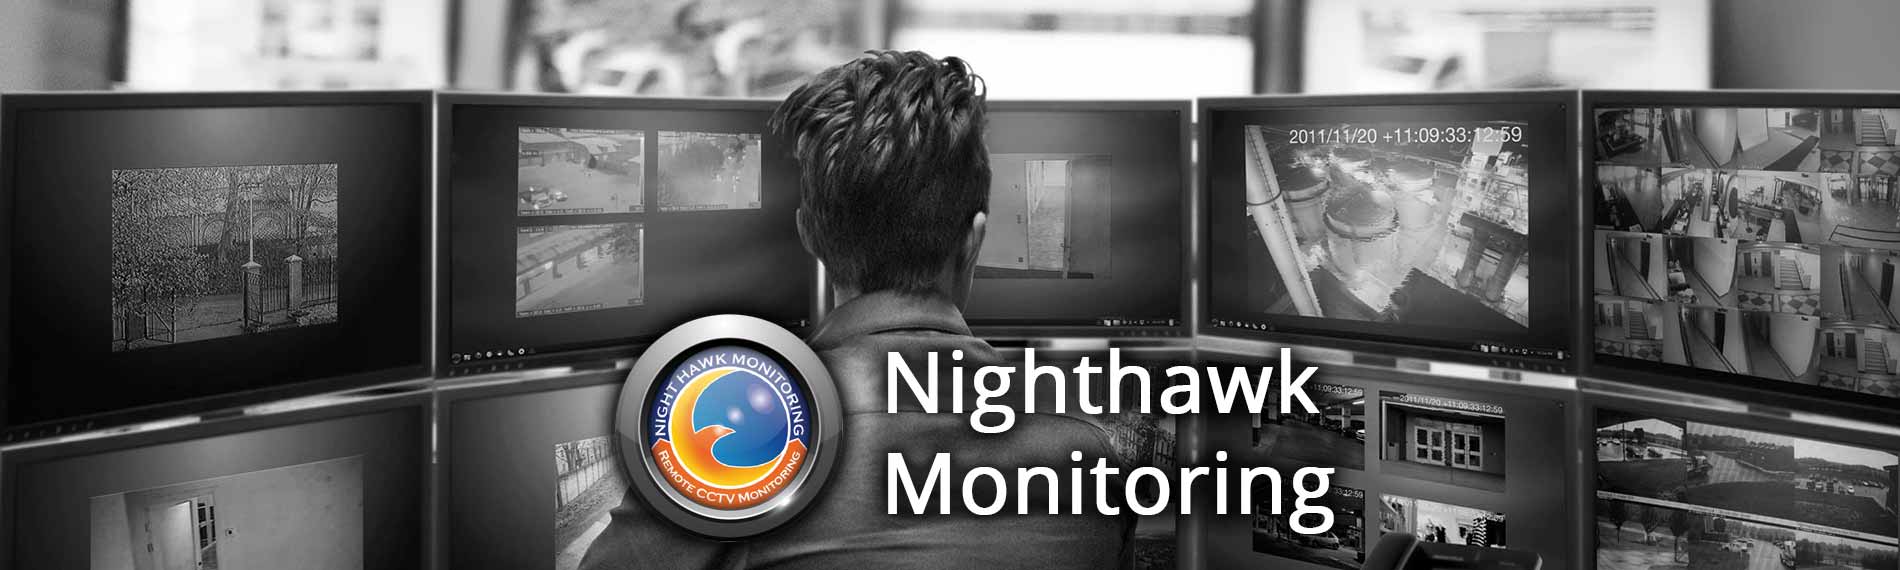 Remote Video Surveillance Denver - Denver Remote Video Surveillance Monitoring - Live Security Cameras Monitoring Denver Colorado